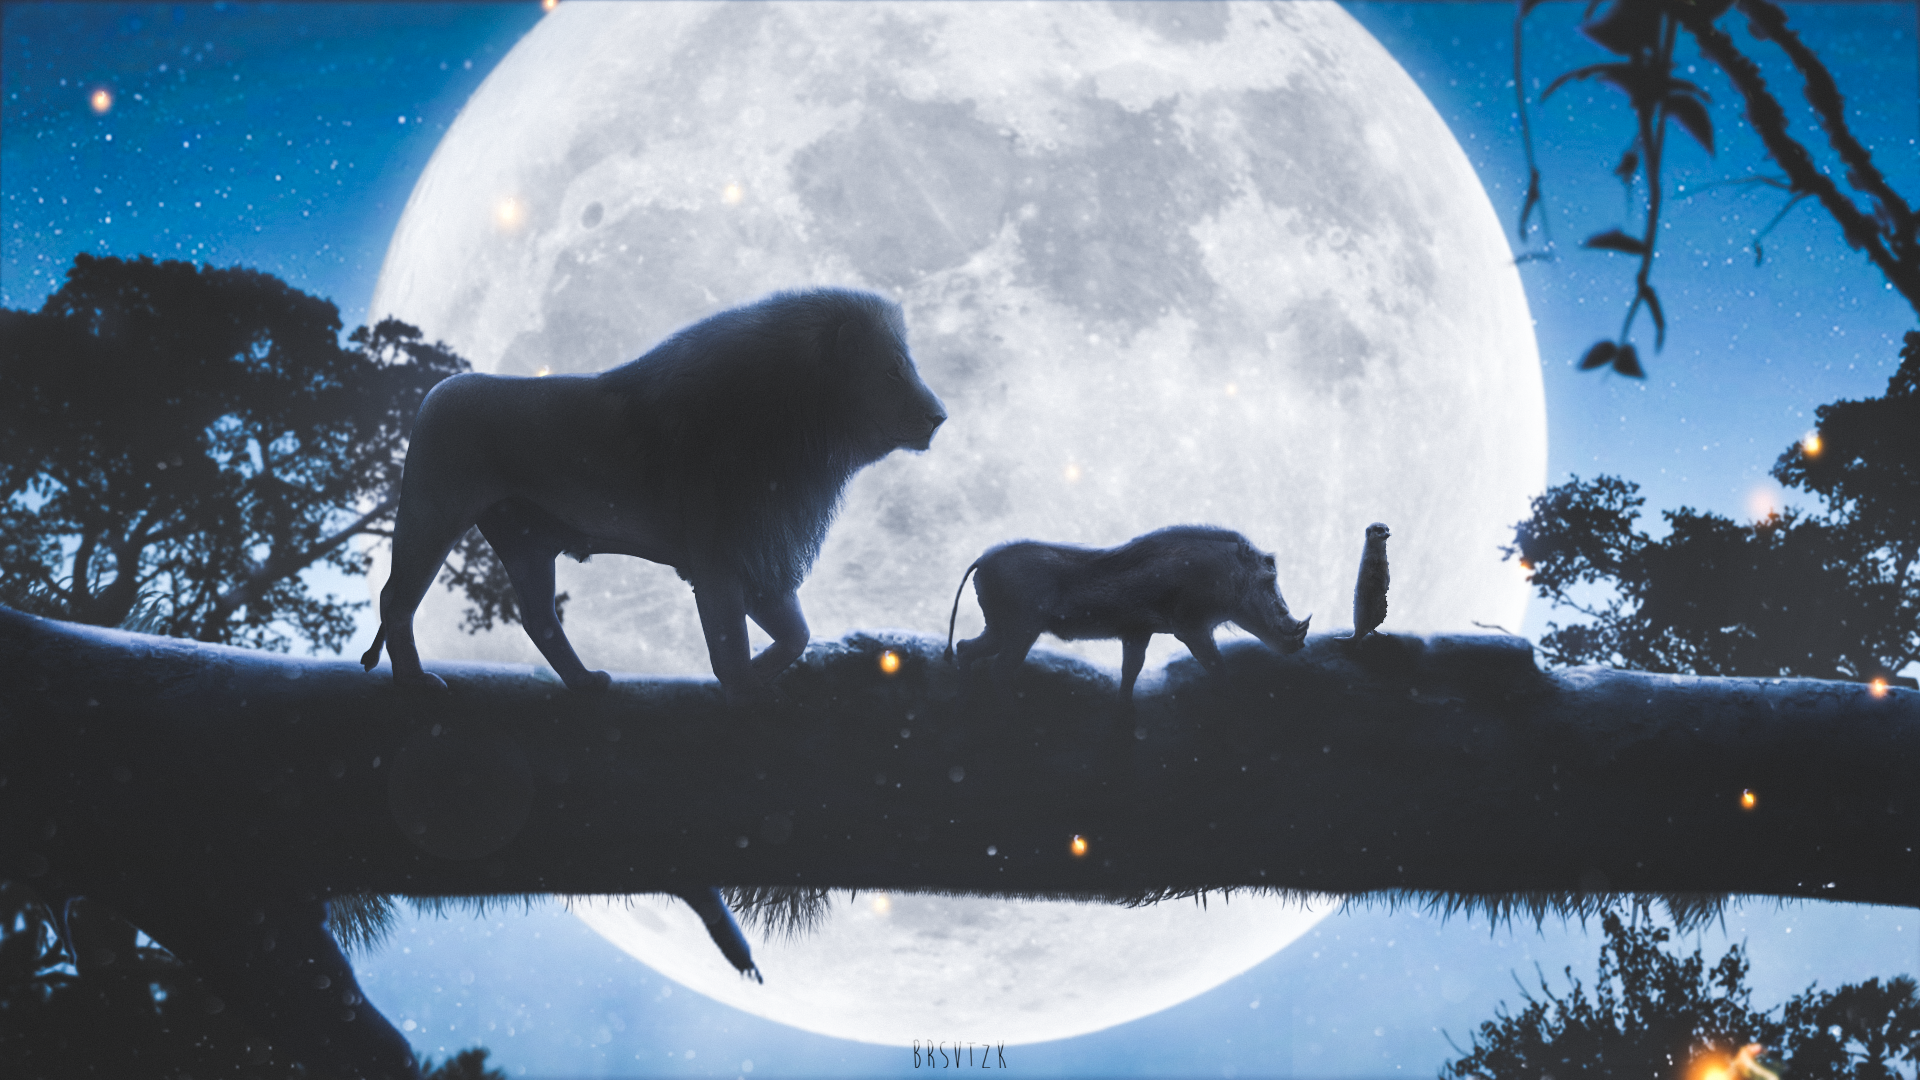 The Lion King Digital Art Moon Night Wallpaper - Resolution:1920x1080 -  ID:1248378 